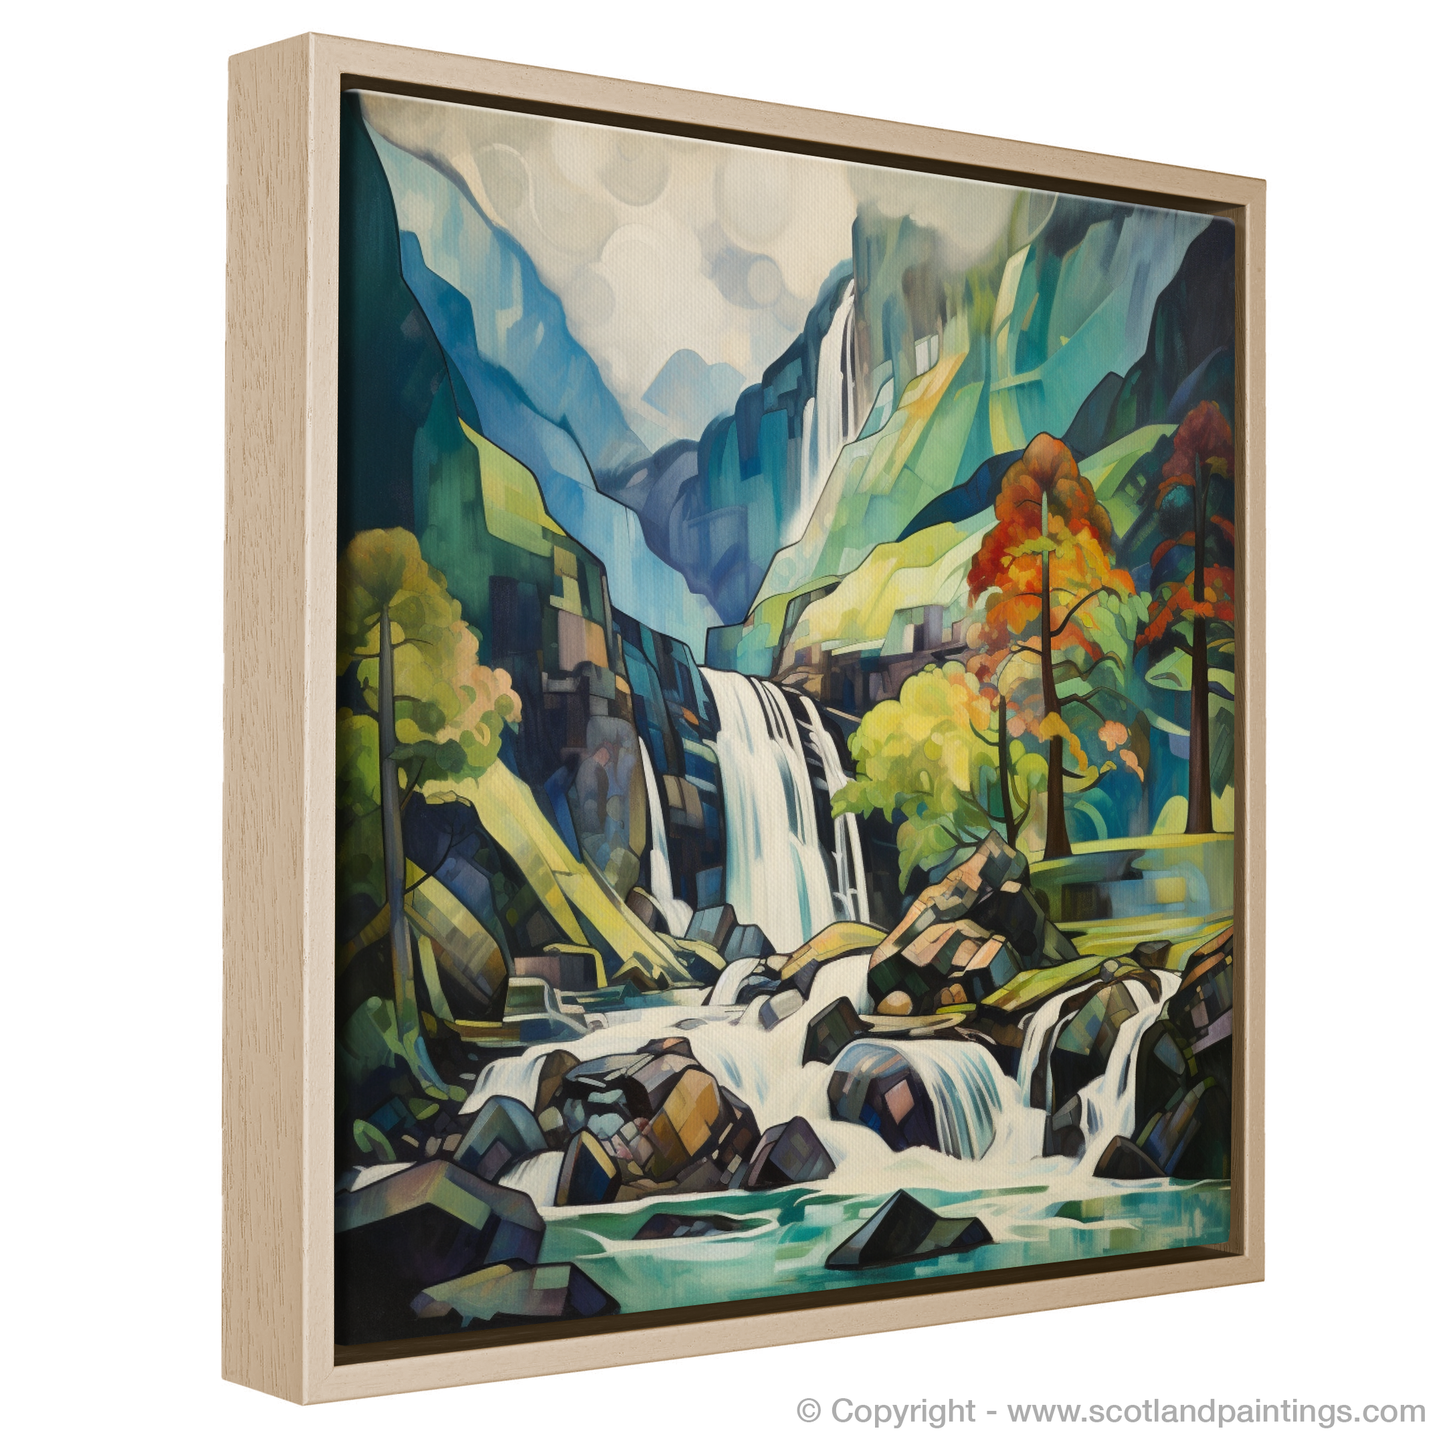 Cascading Geometries: A Cubist Homage to Glencoe's Wild Waterfall